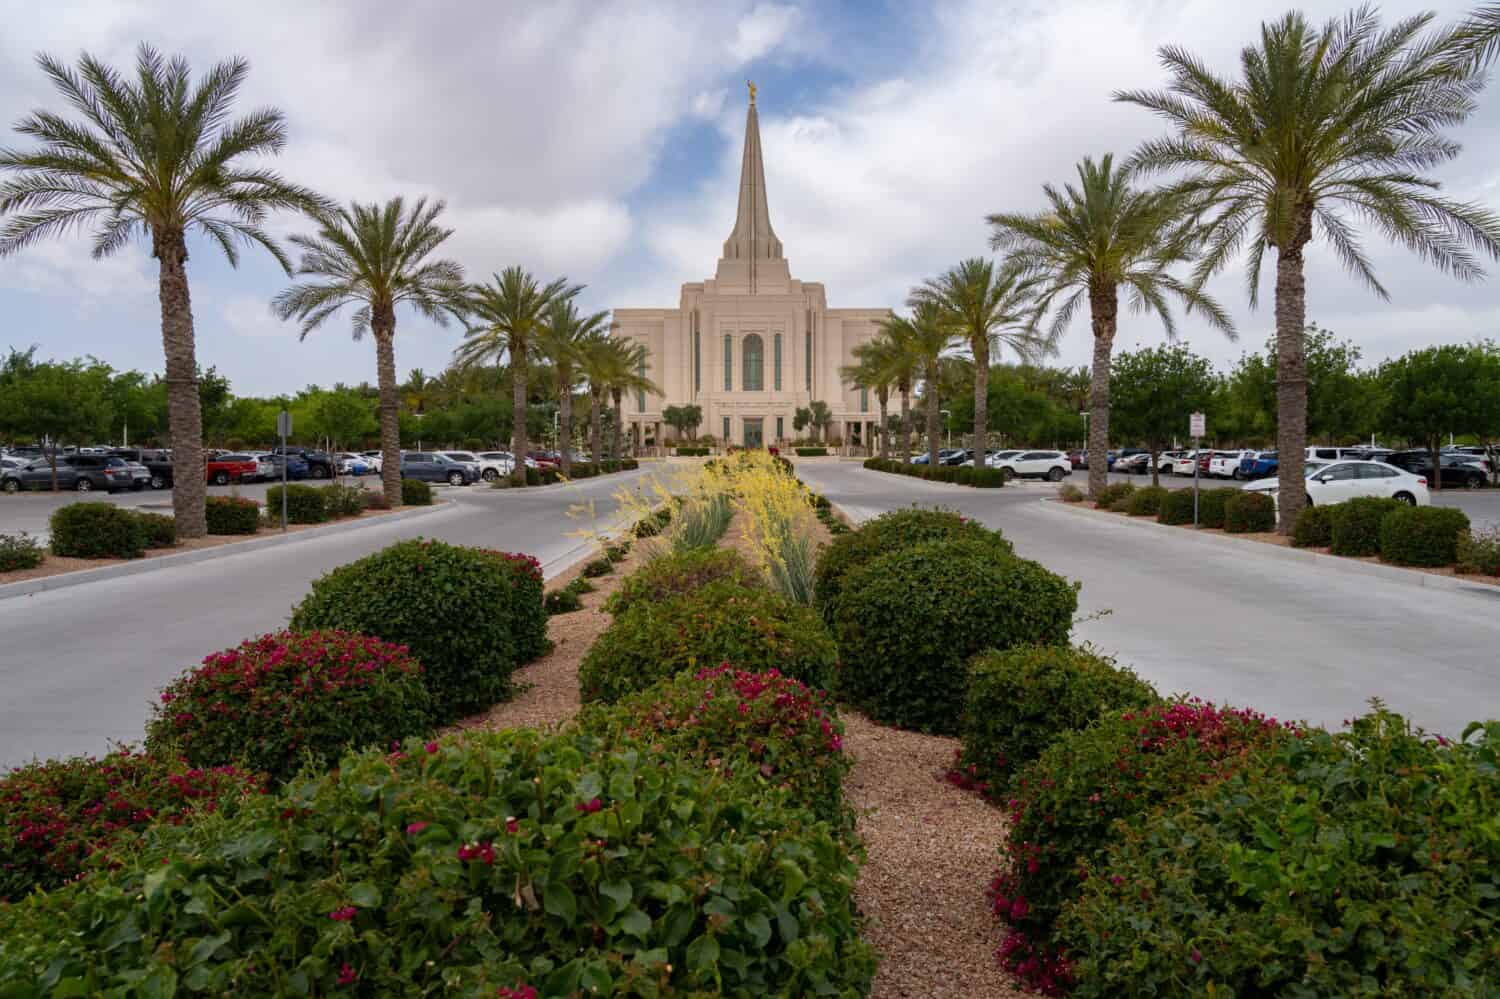 Mormon Temple in Gilbert Arizona, America, USA